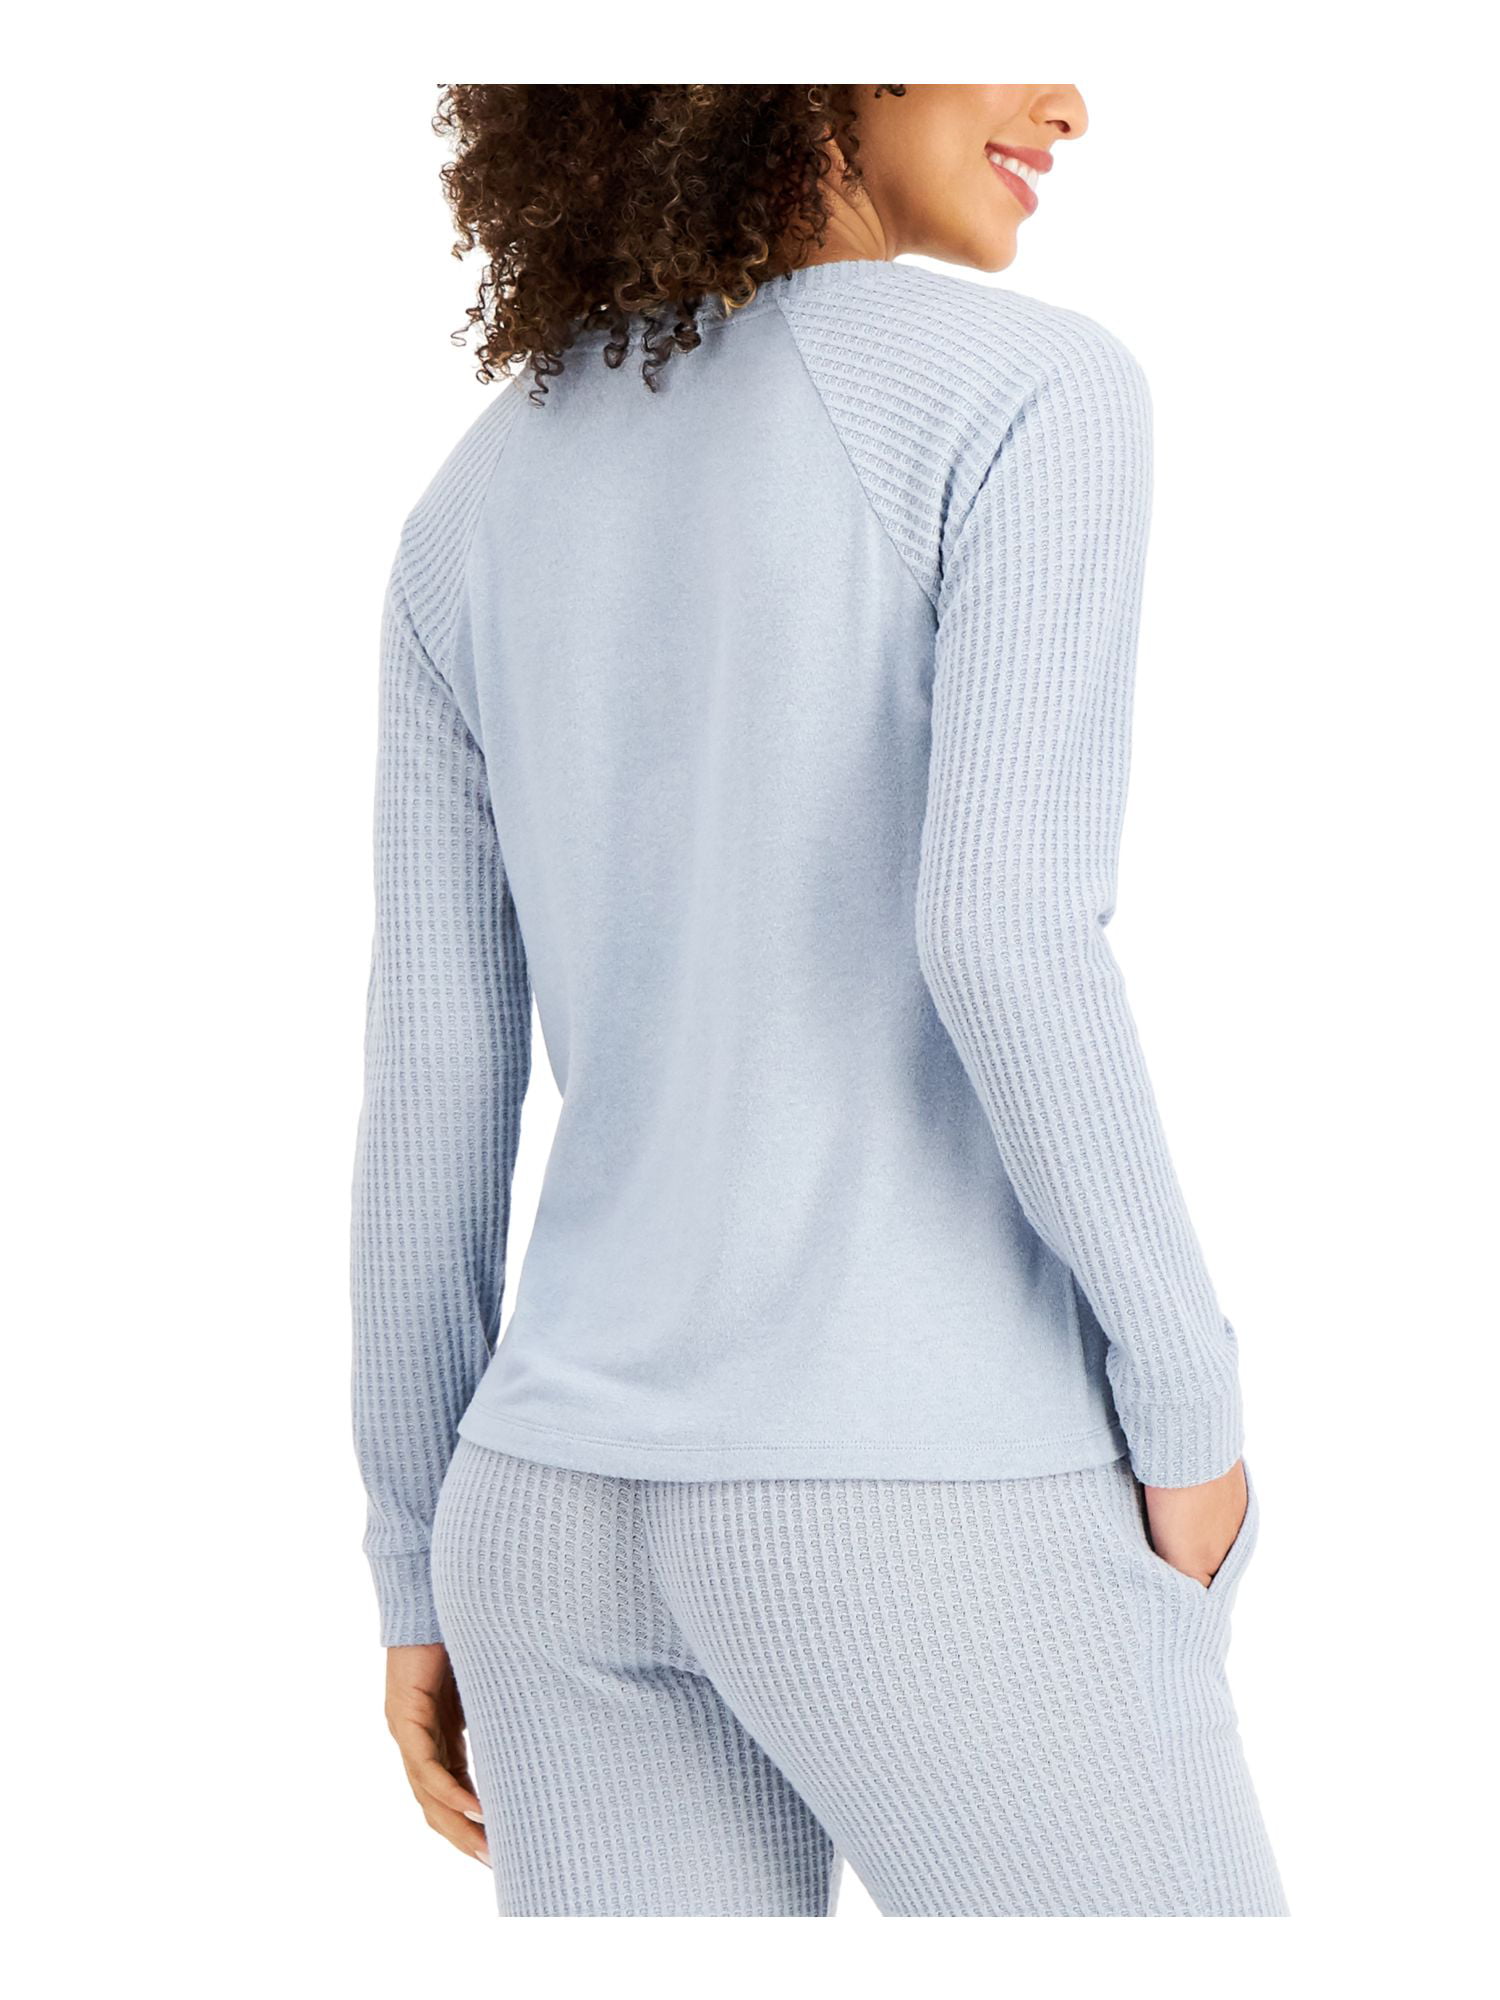 ALFANI Intimates Blue Pullover Sleep Shirt Pajama Top S